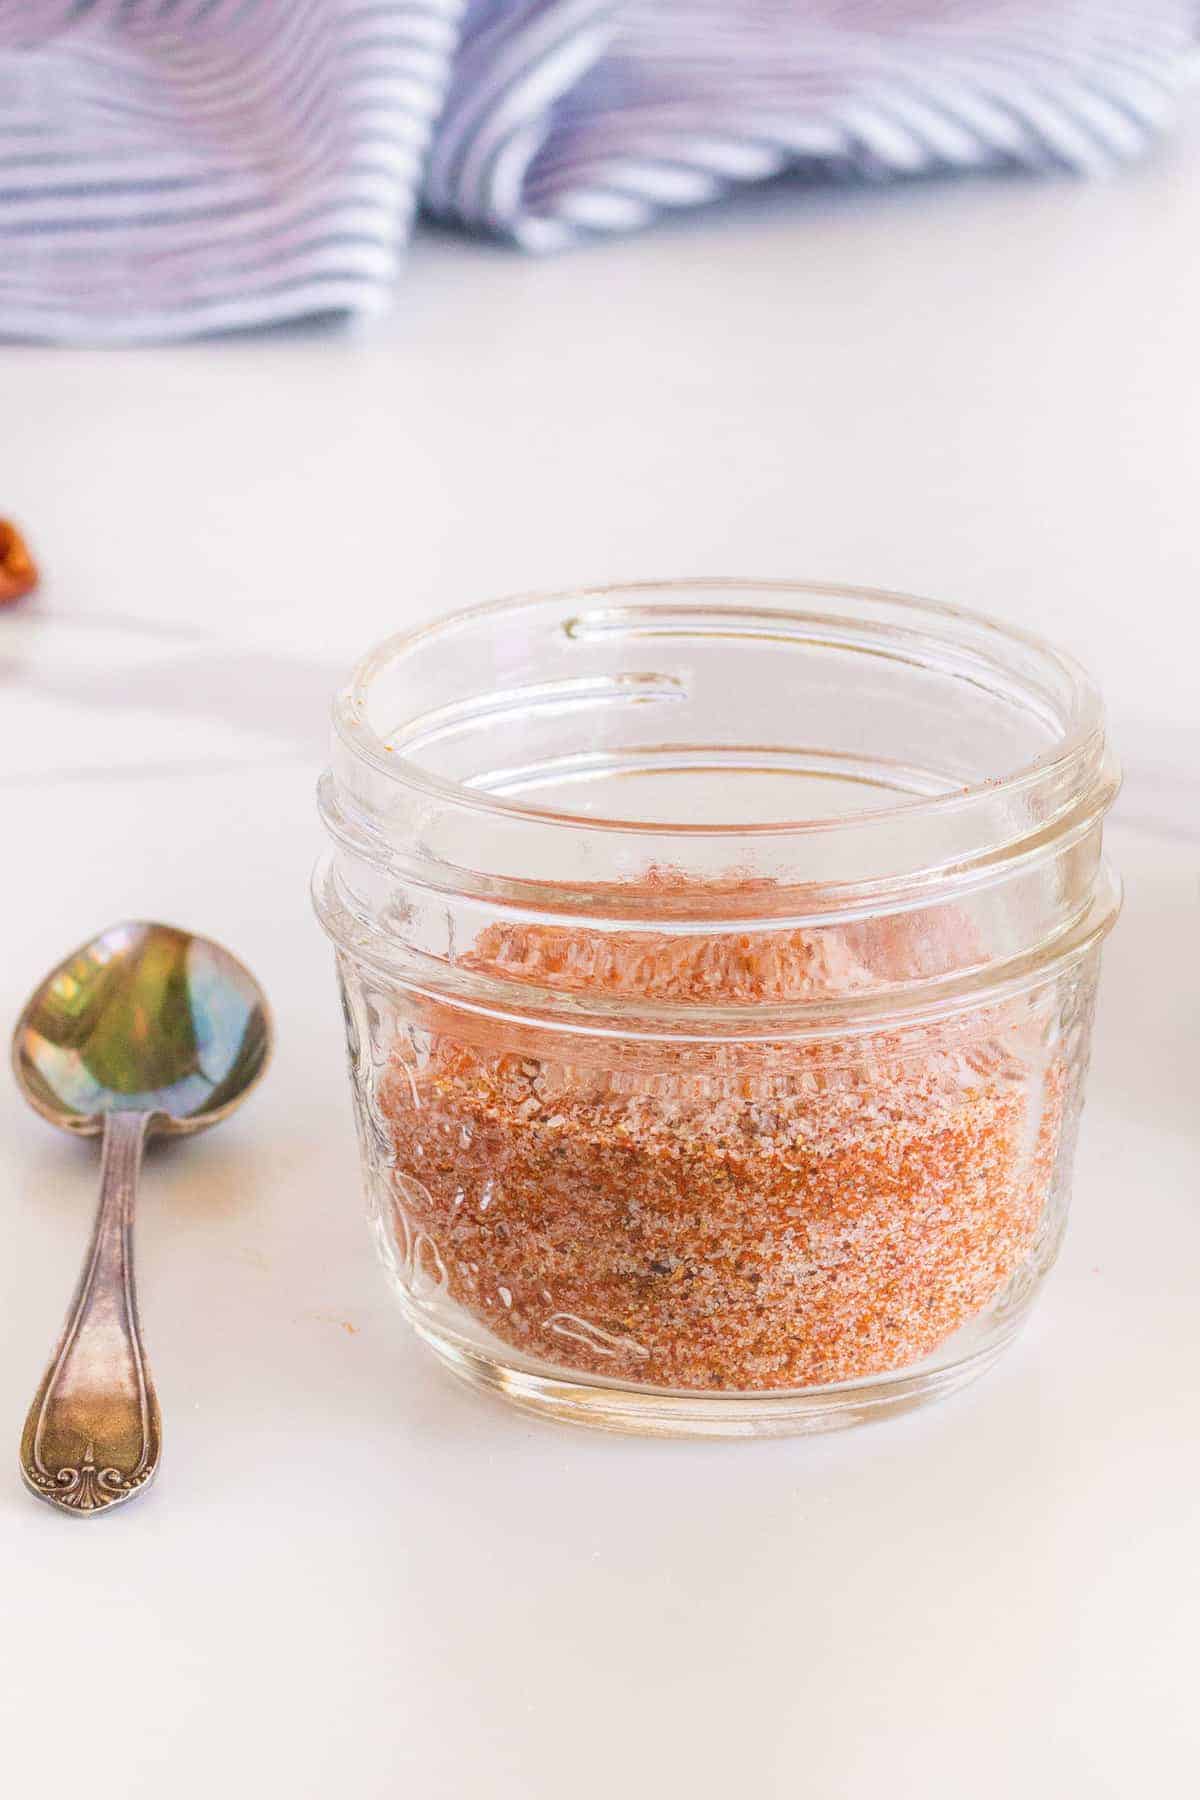 The Best Homemade Salt Substitute Seasoning Recipe - Intentionally Eat